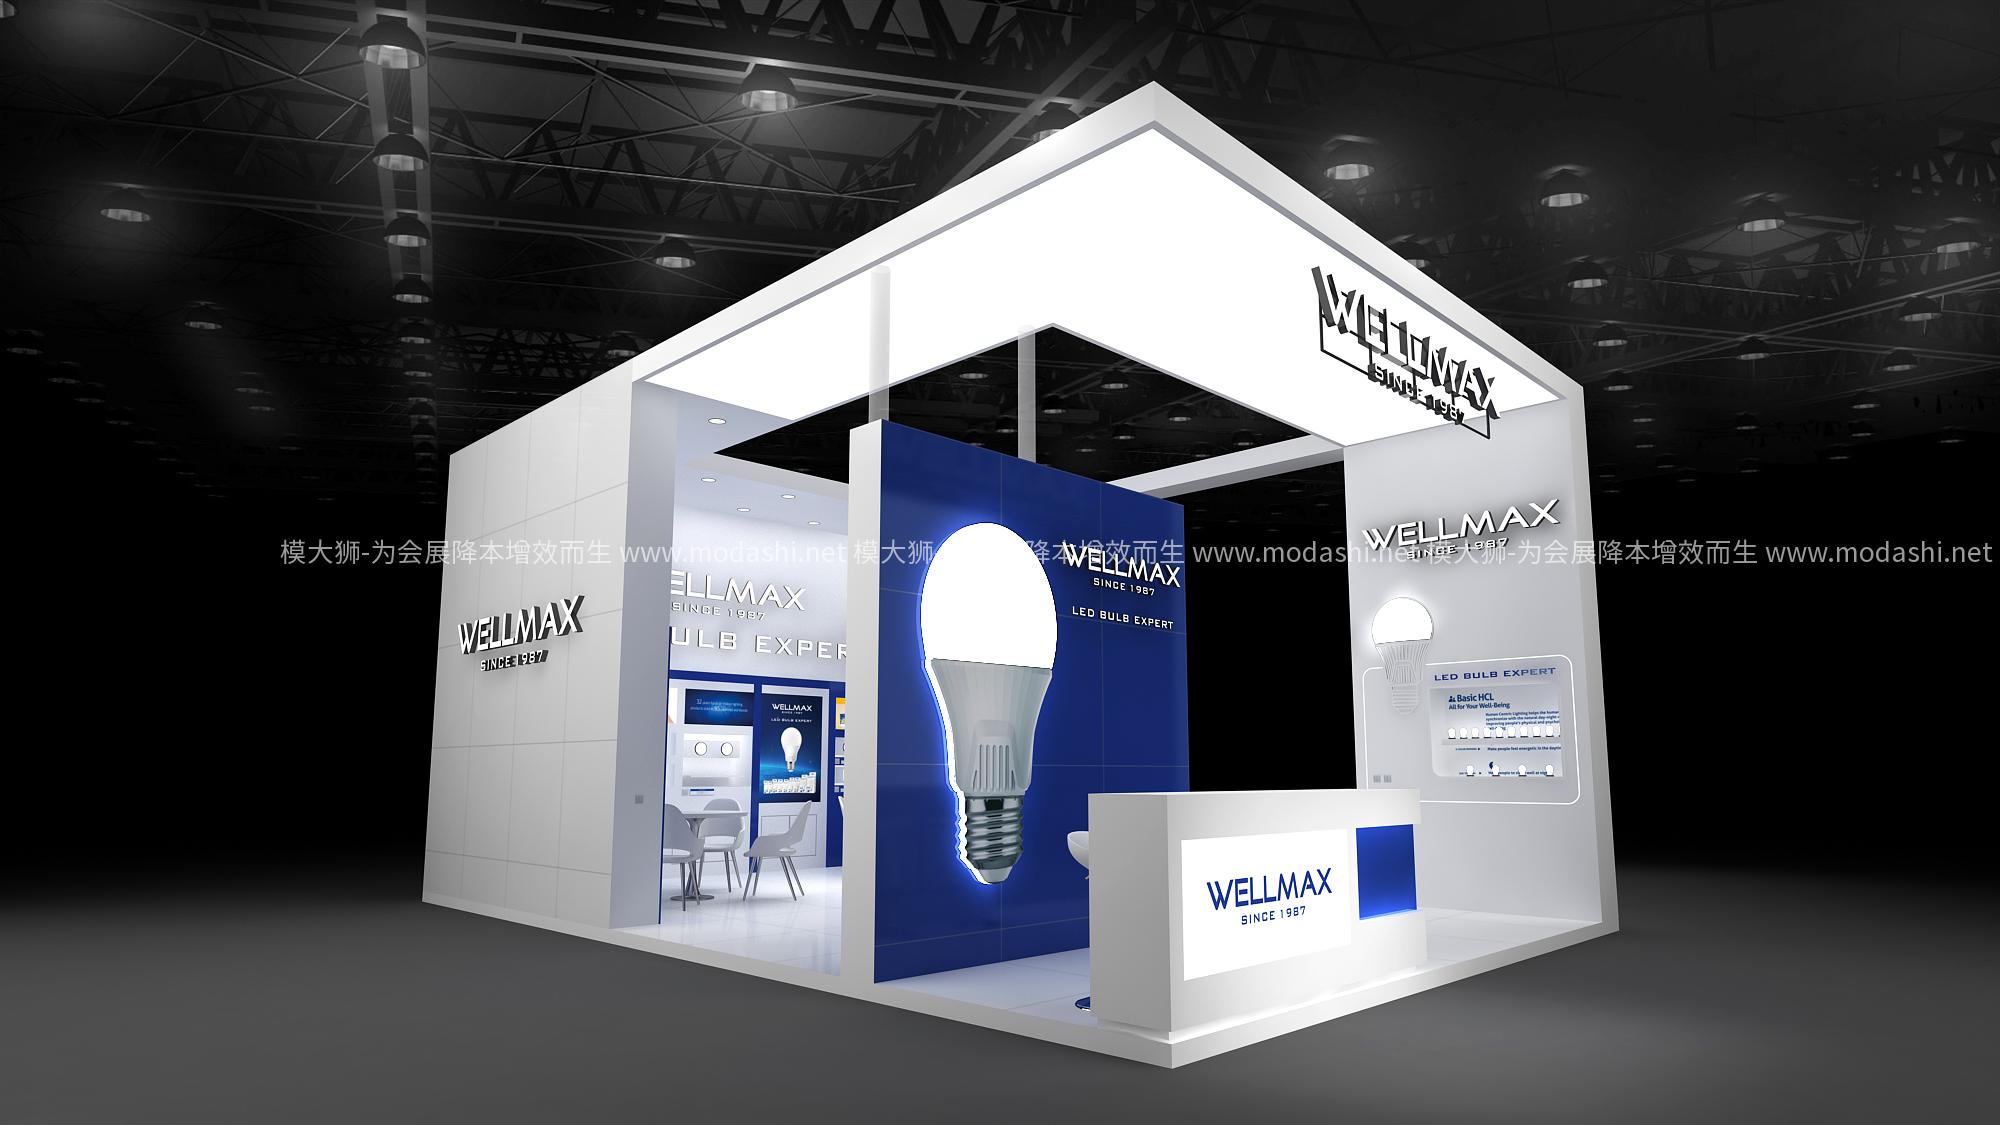 WELLMAX展览展示展台模型